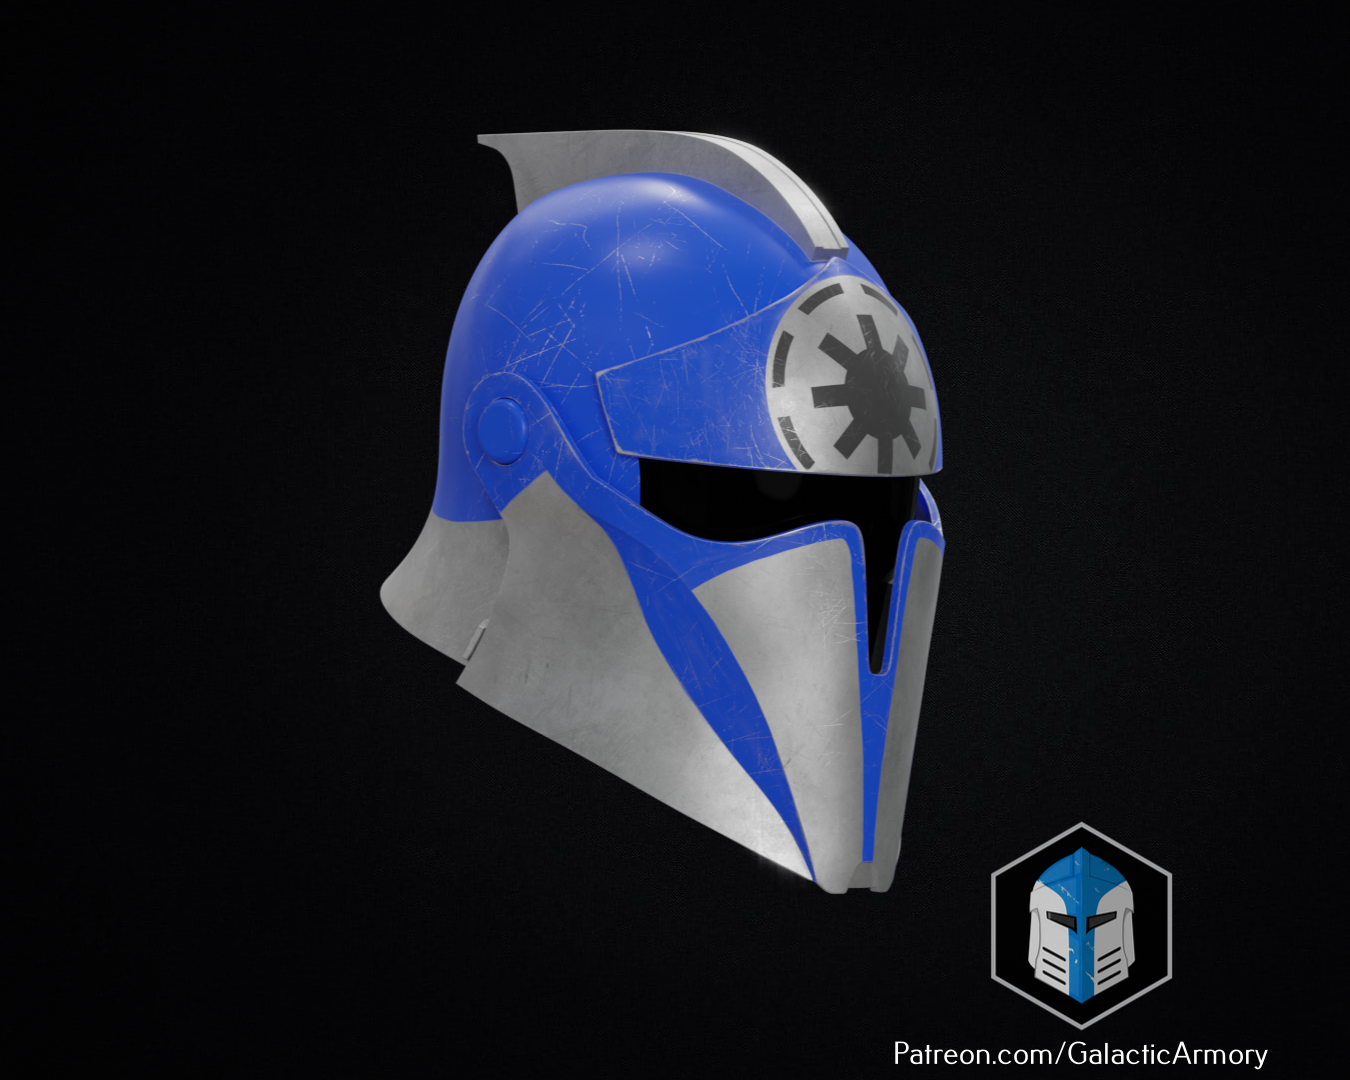 Bartok Medieval ARC Helmet - 3D Print Files